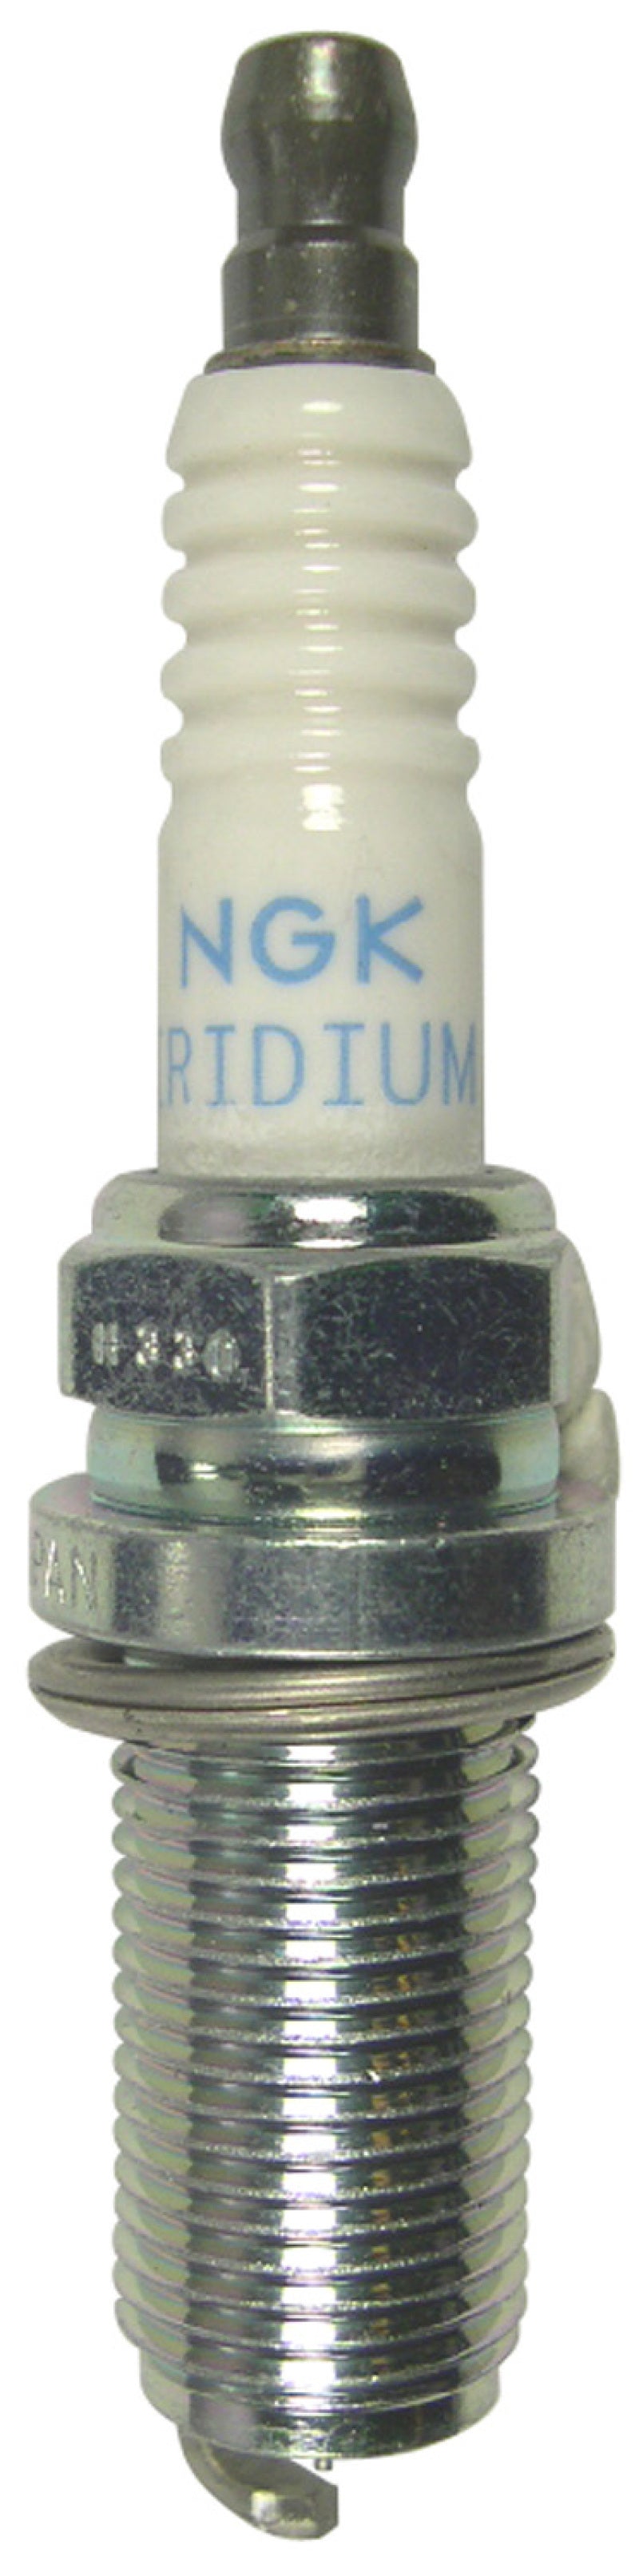 NGK Iridium Racing Spark Plug Box of 4 (R7437-9).